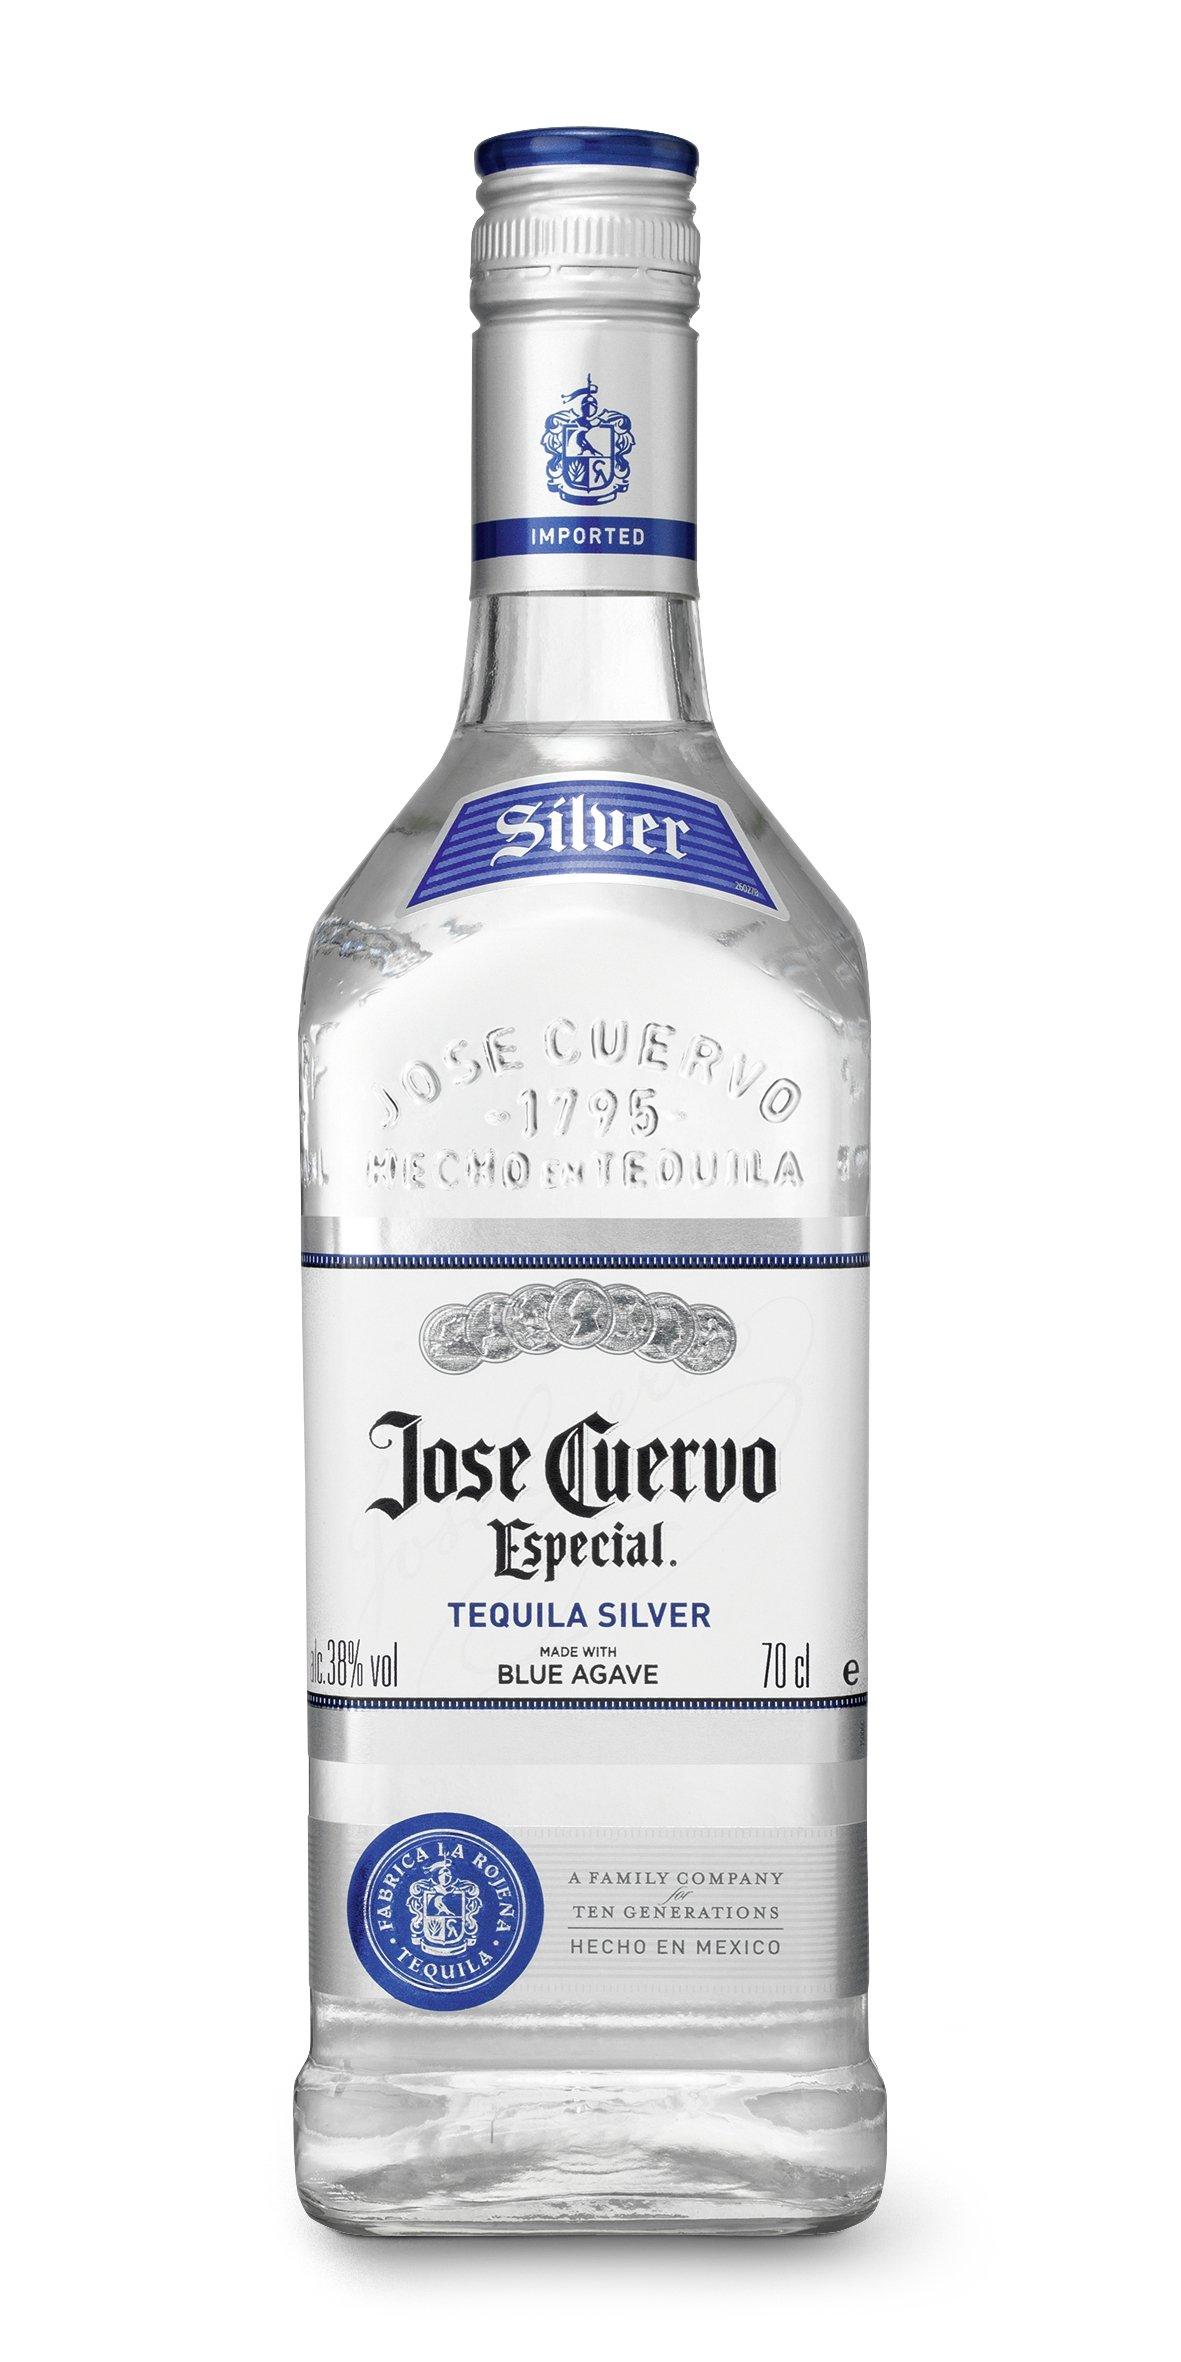 Image of Jose Cuervo Especial Tequila Silver - 70 cl